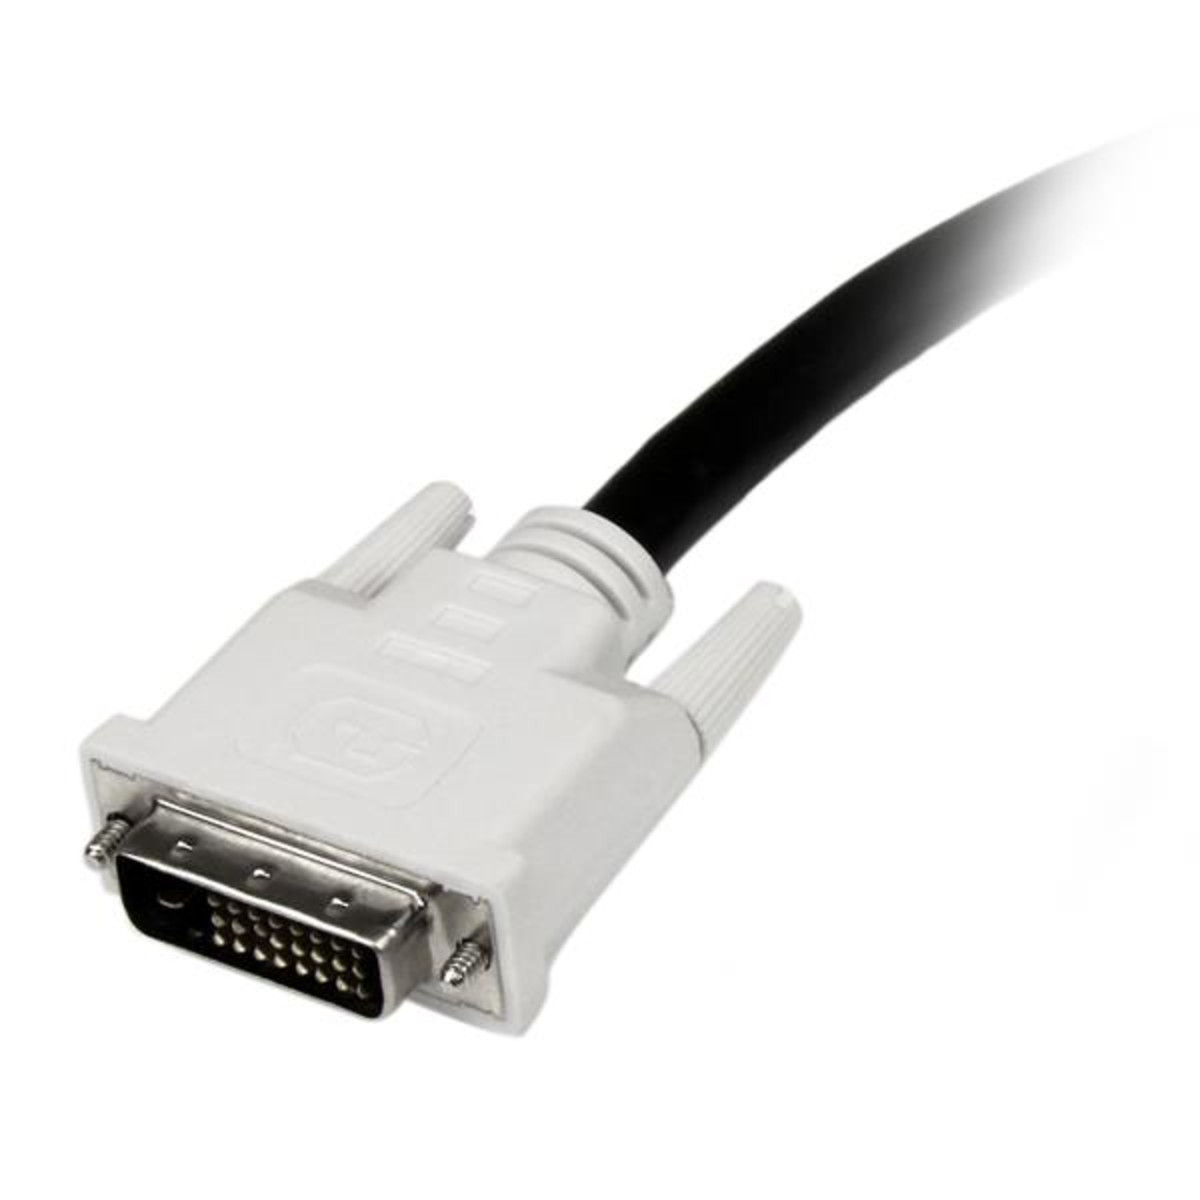 1m DL DVI-D 25pin DVID Digital Cable